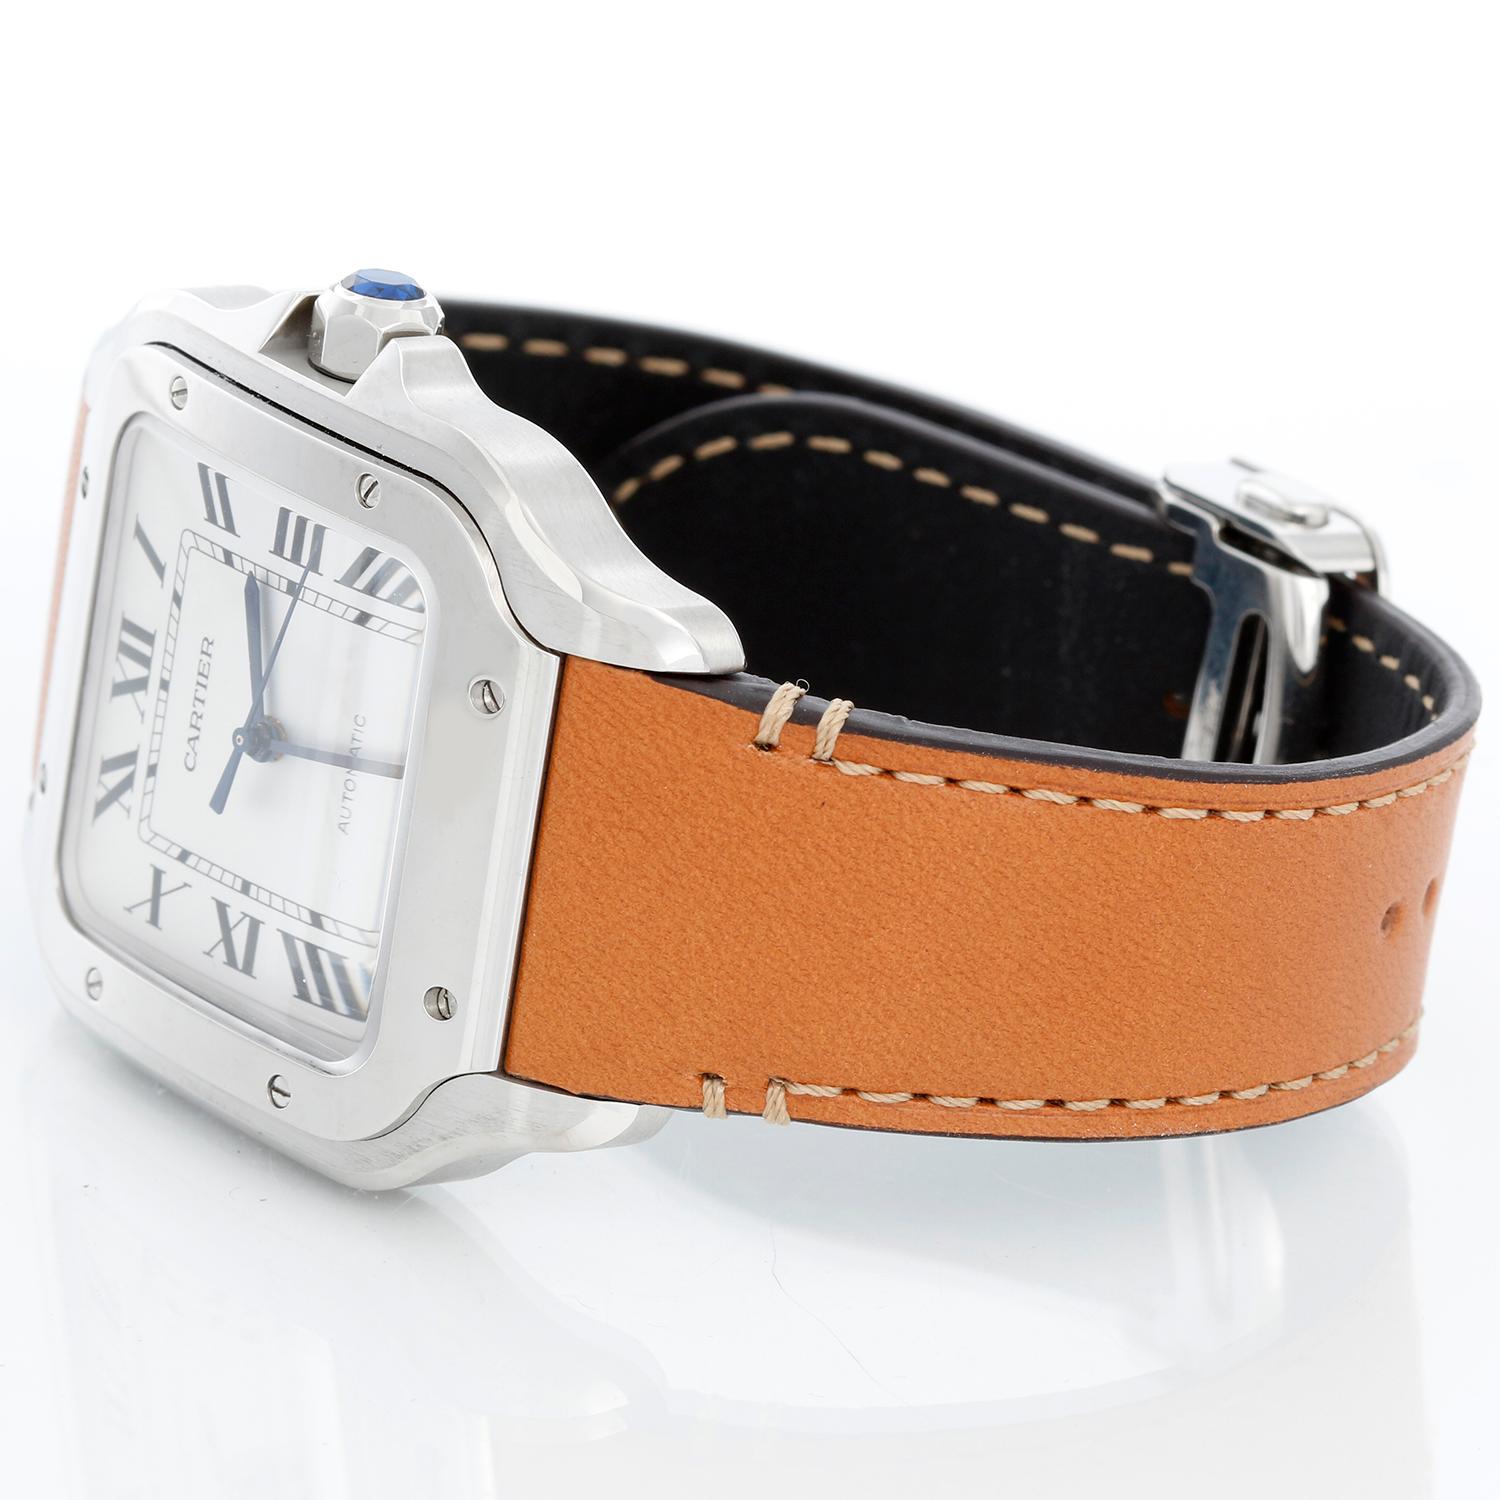 Cartier Santos Large Men's Stainless Steel Watch WSSA0018 4072 1